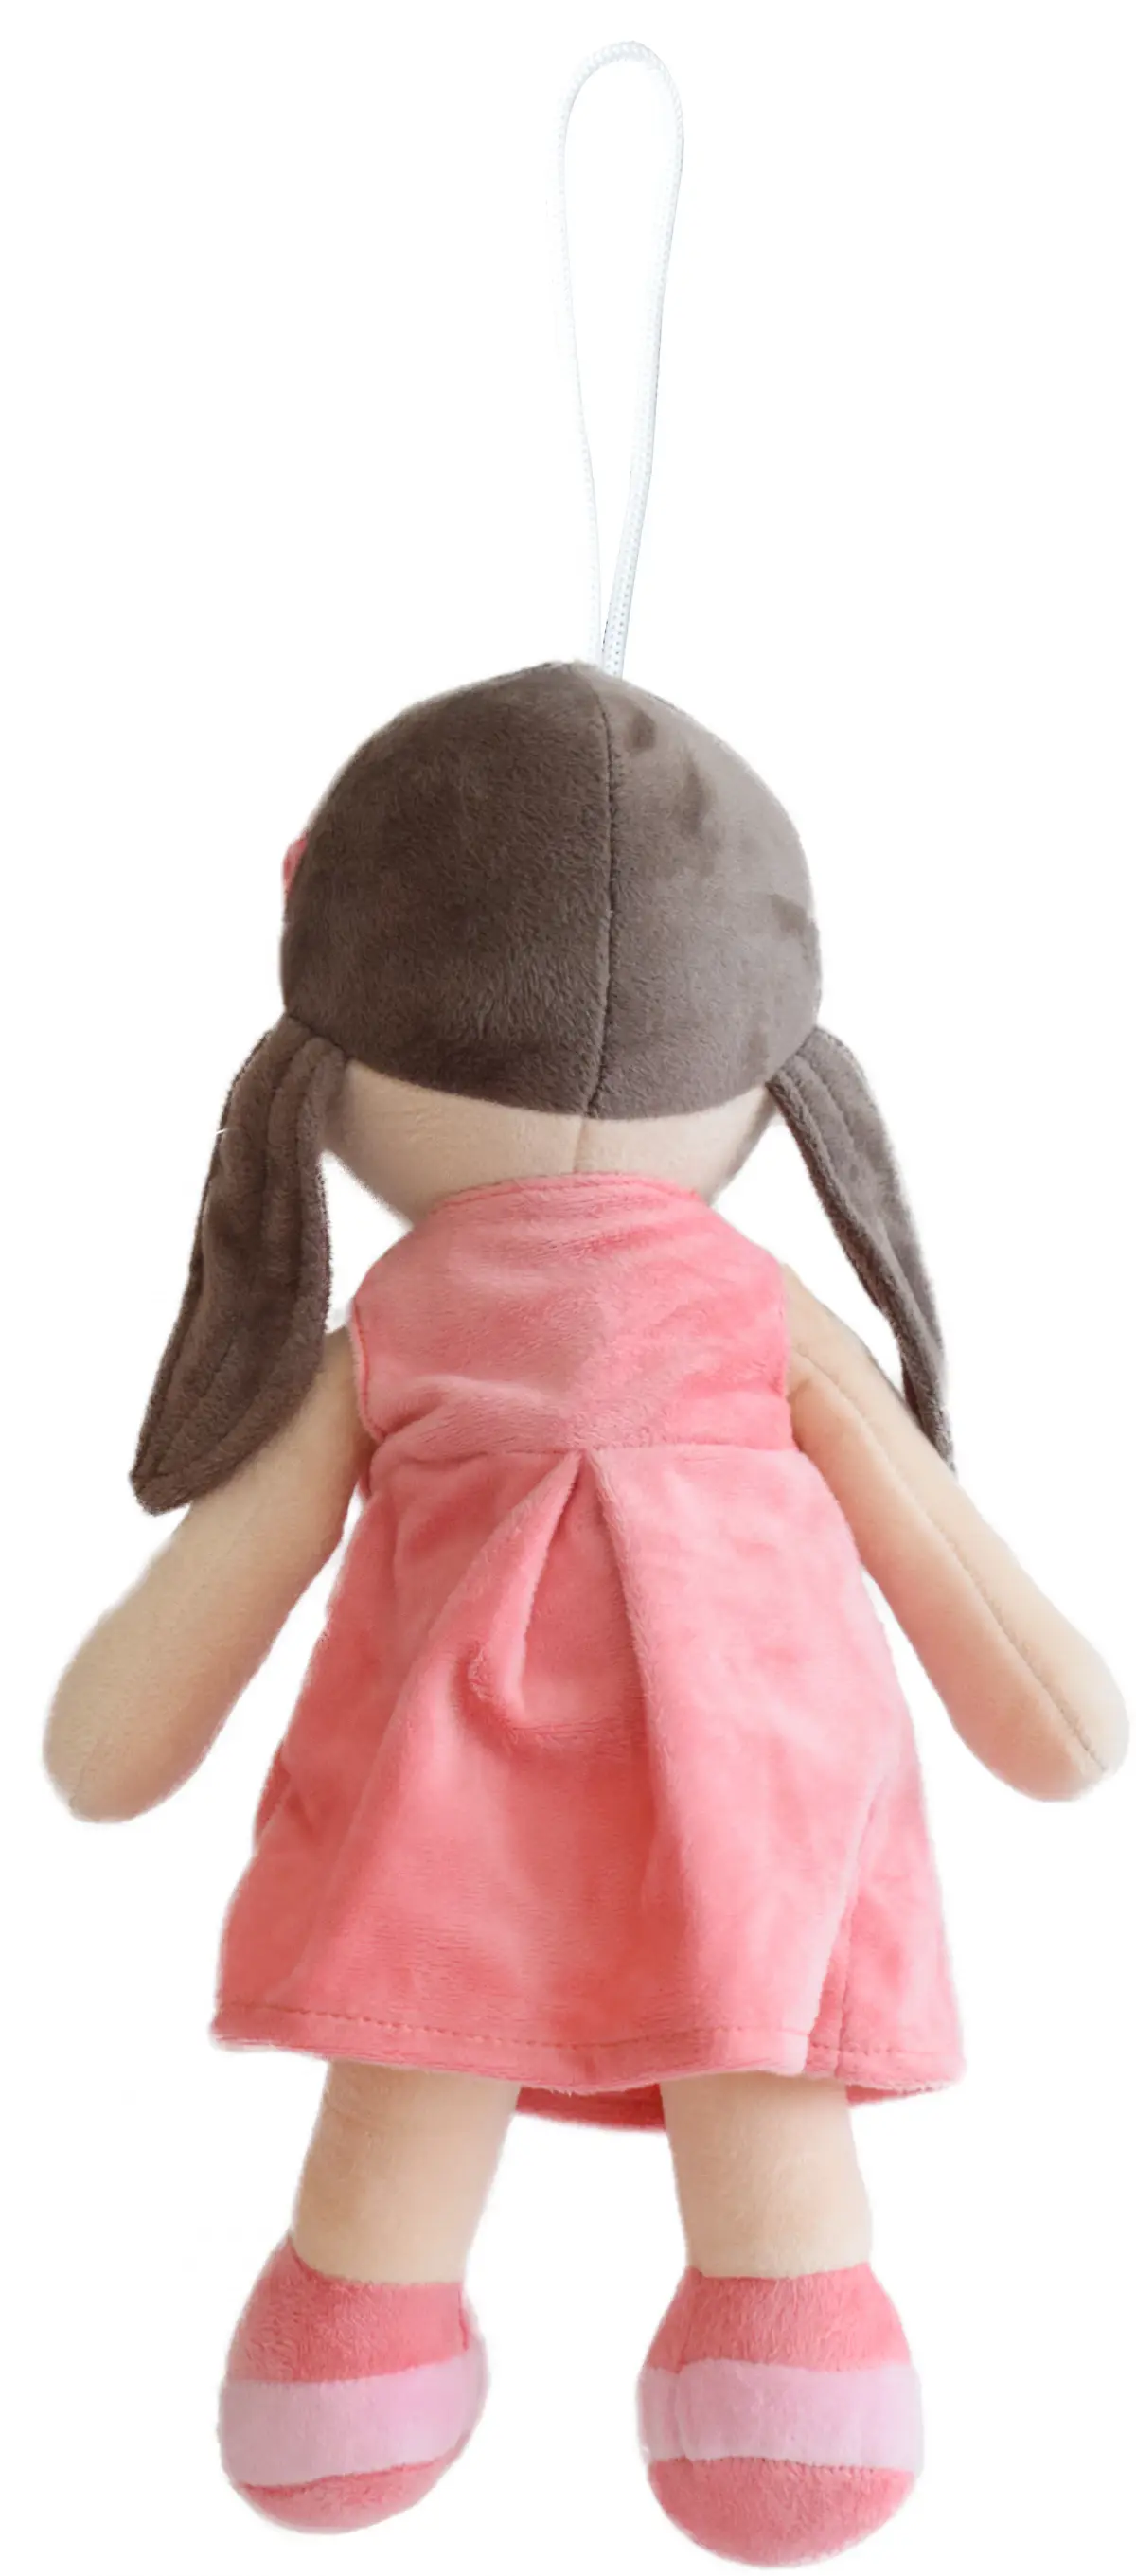 Plush Cute Super Soft Toy Huggable Doll With Pom Pom By Mirada, 38Cm, Coral